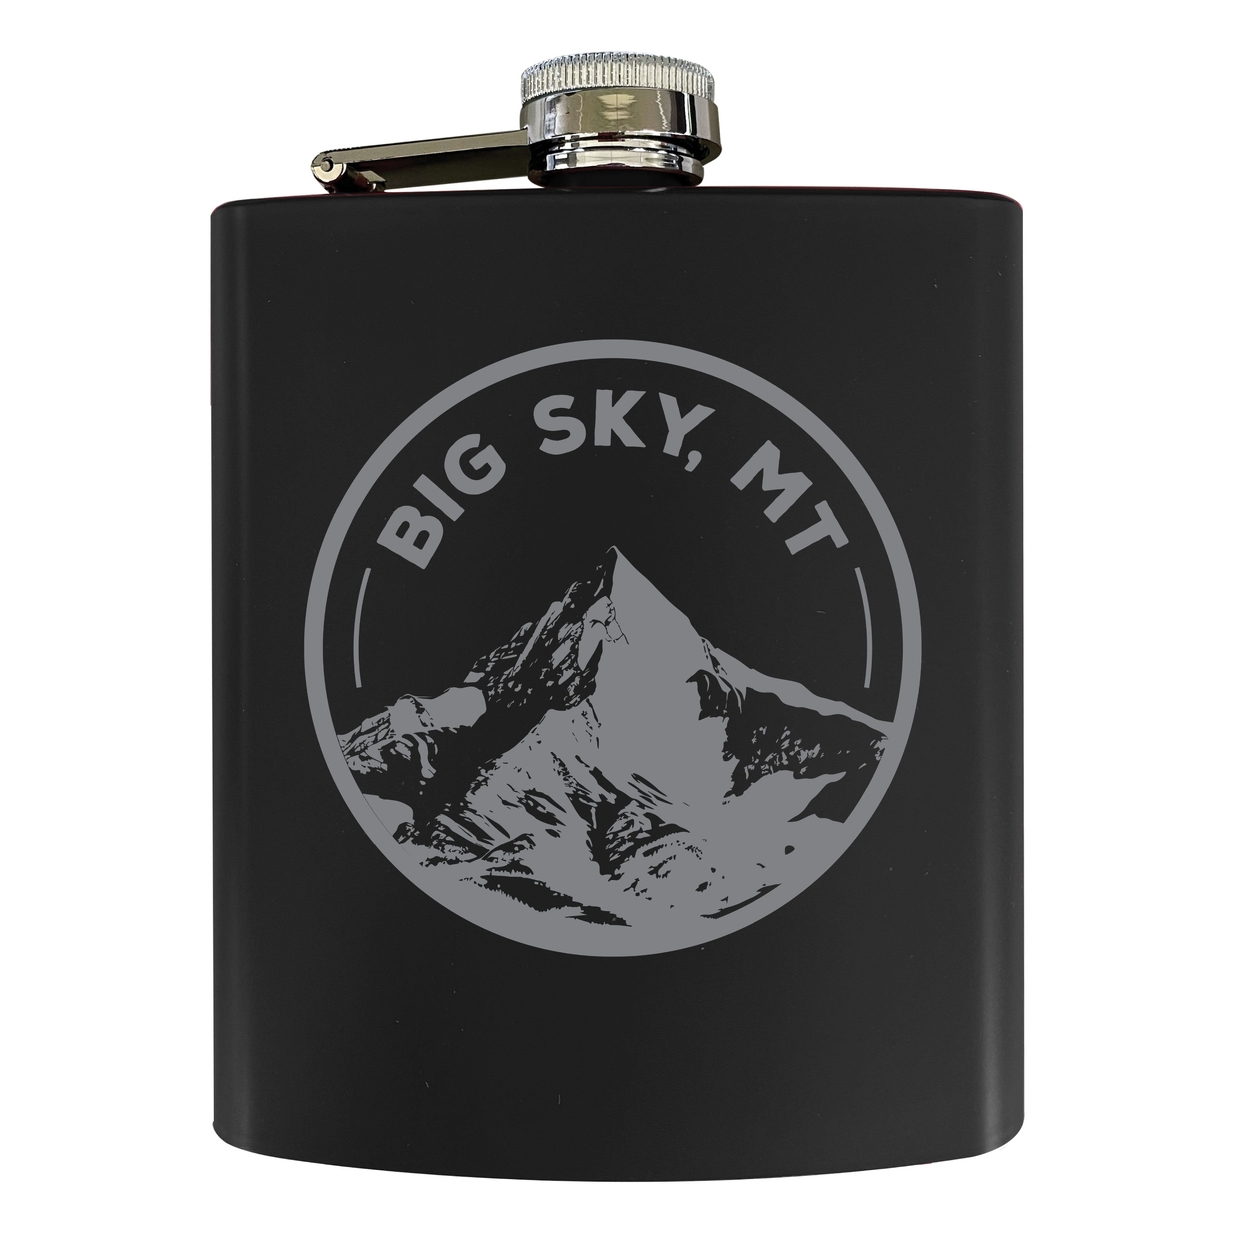 Big Sky Montana Souvenir 7 Oz Engraved Steel Flask Matte Finish - Red,,2-Pack